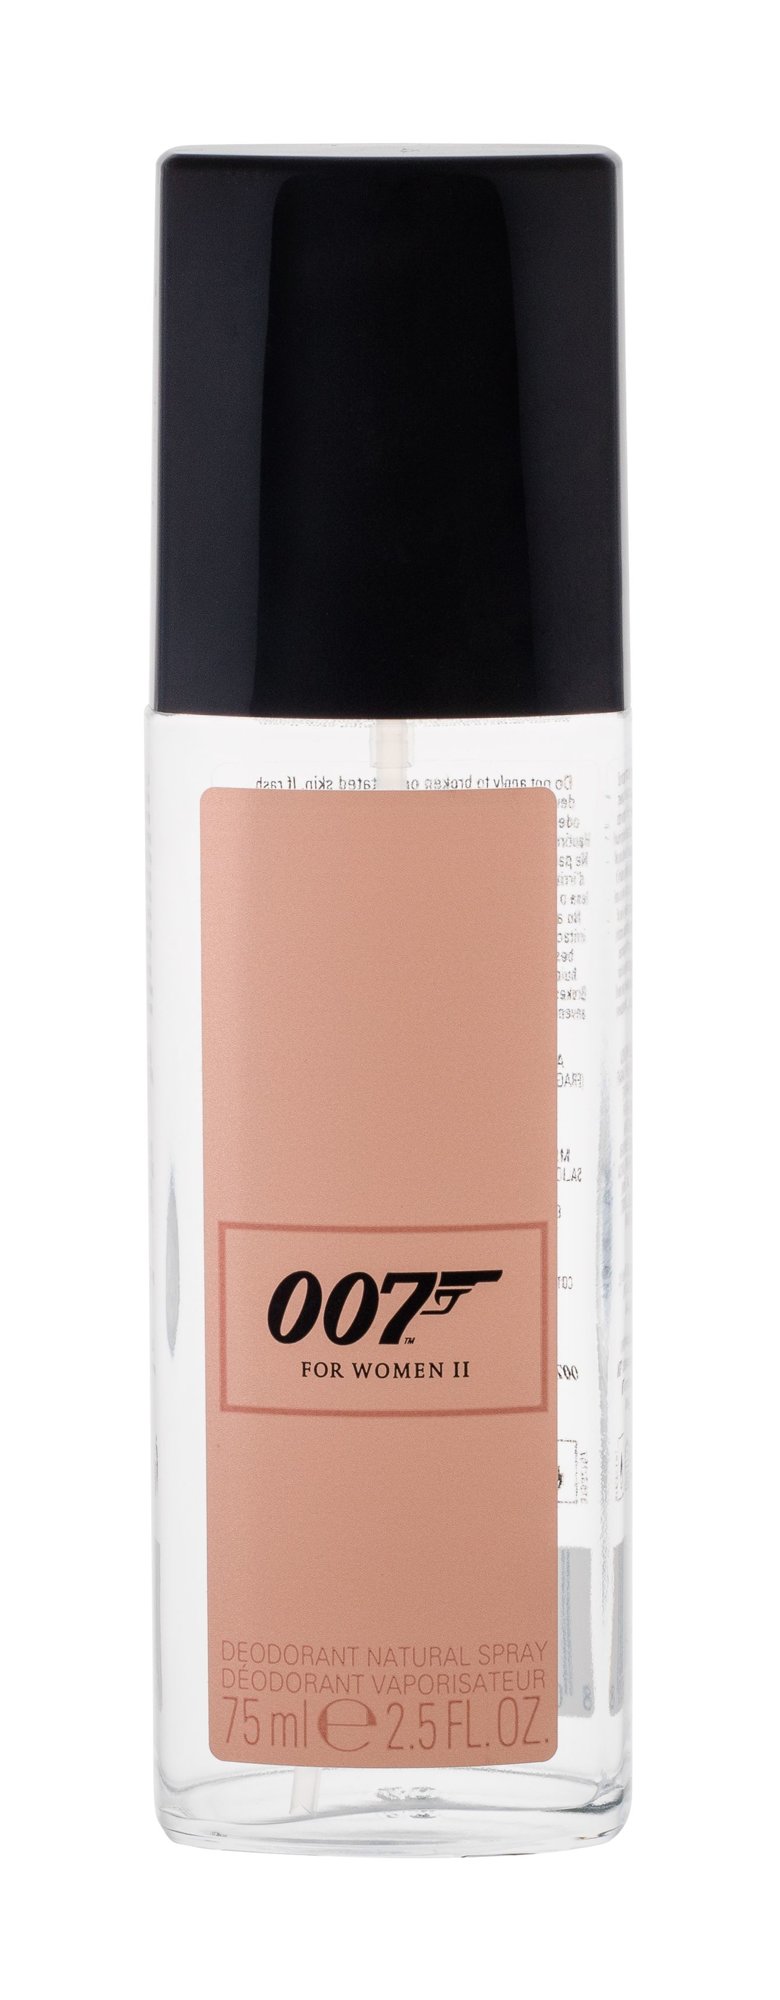 James Bond 007 James Bond 007 For Women II 75ml dezodorantas